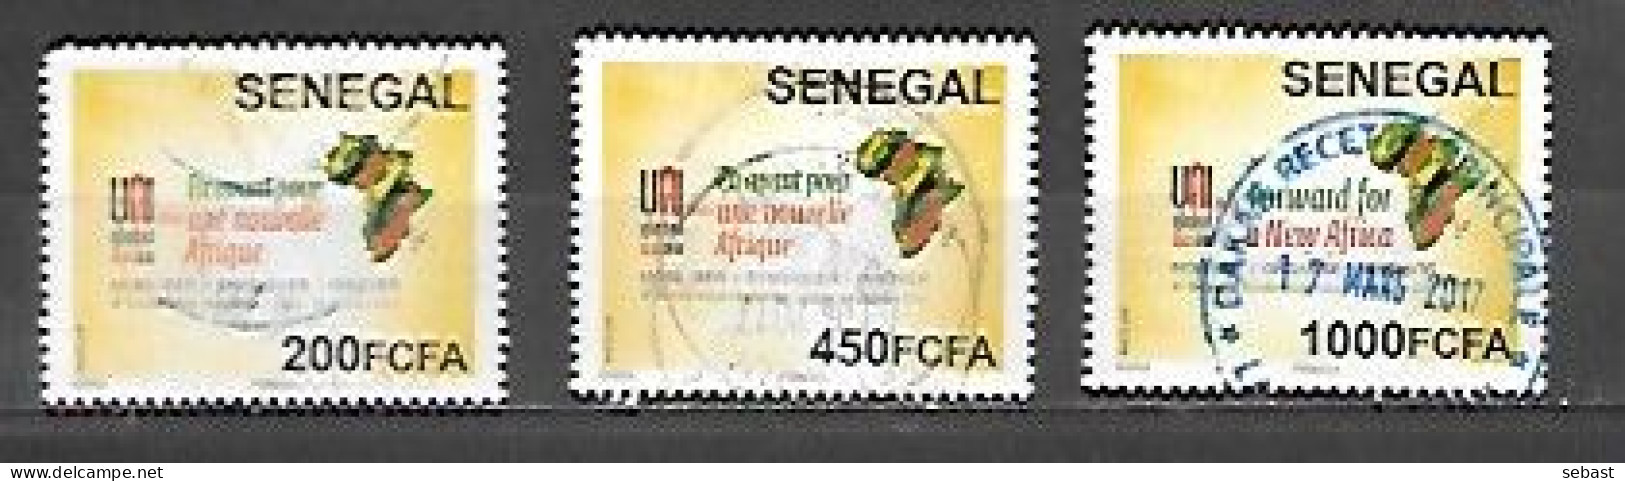 TIMBRE OBLITERE DU SENEGAL DE 2017 N° MICHEL 2254/56 - Senegal (1960-...)